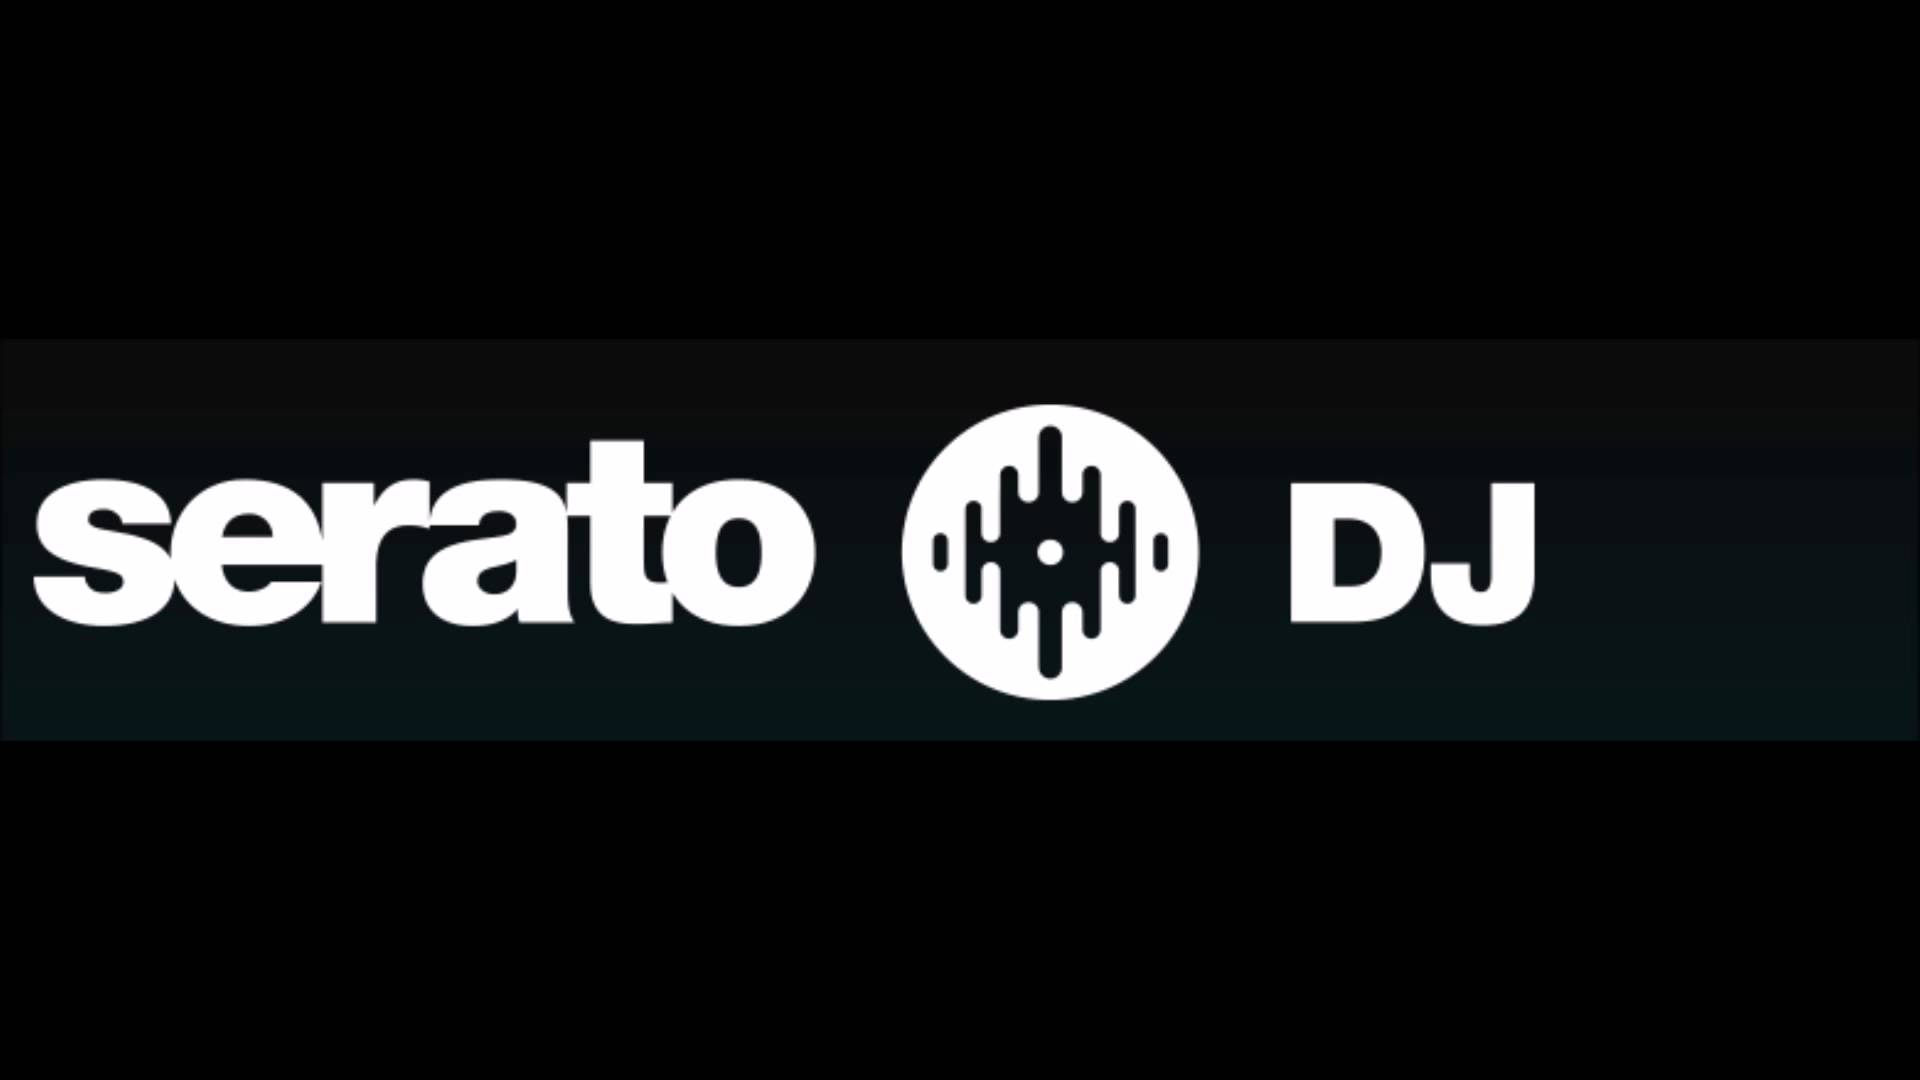 Serato DJ Pro 3.0.12.266 download the new version for ios